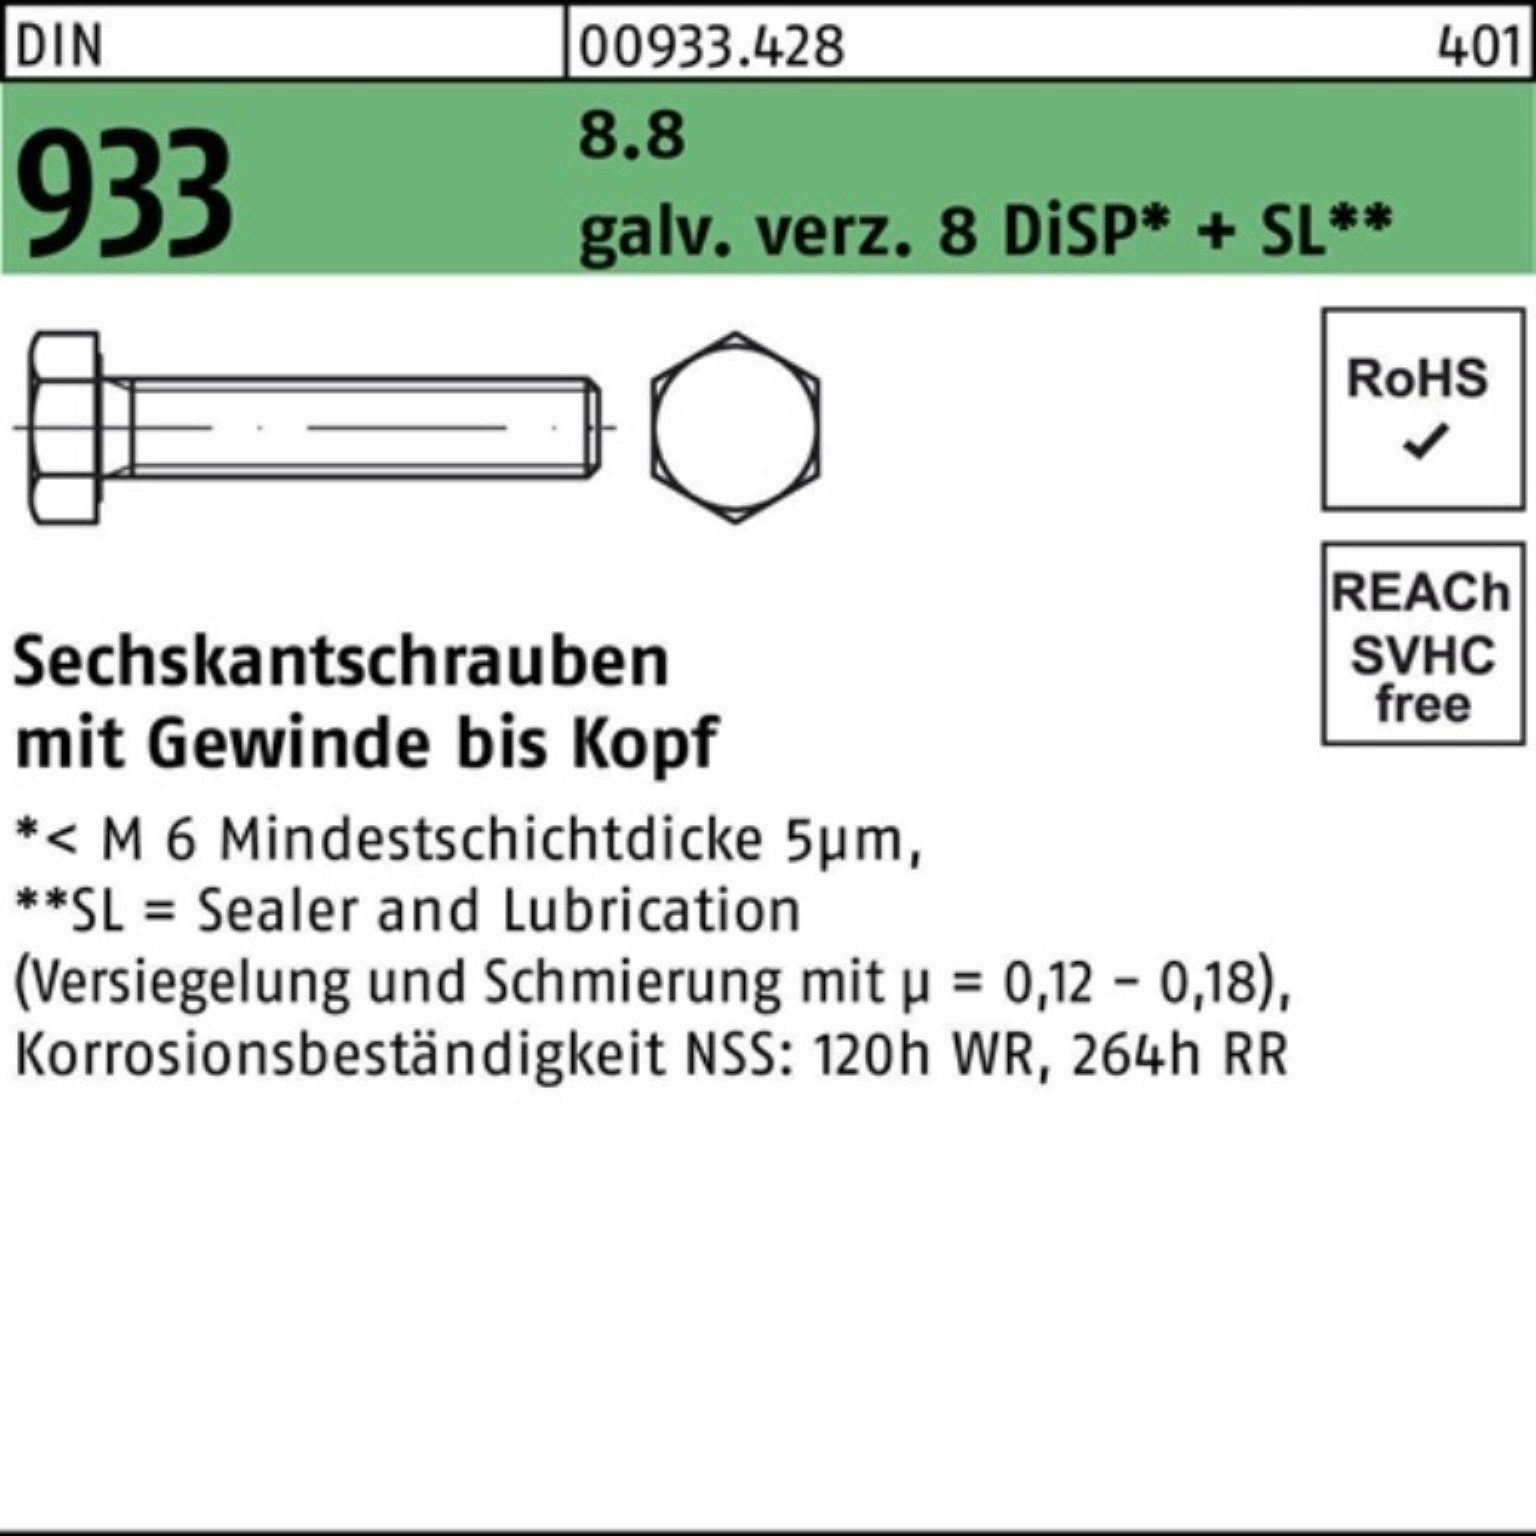 DIN M6x Zn 8 + 933 Pack 500er DiSP VG SL Sechskantschraube Sechskantschraube gal 8.8 Reyher 30